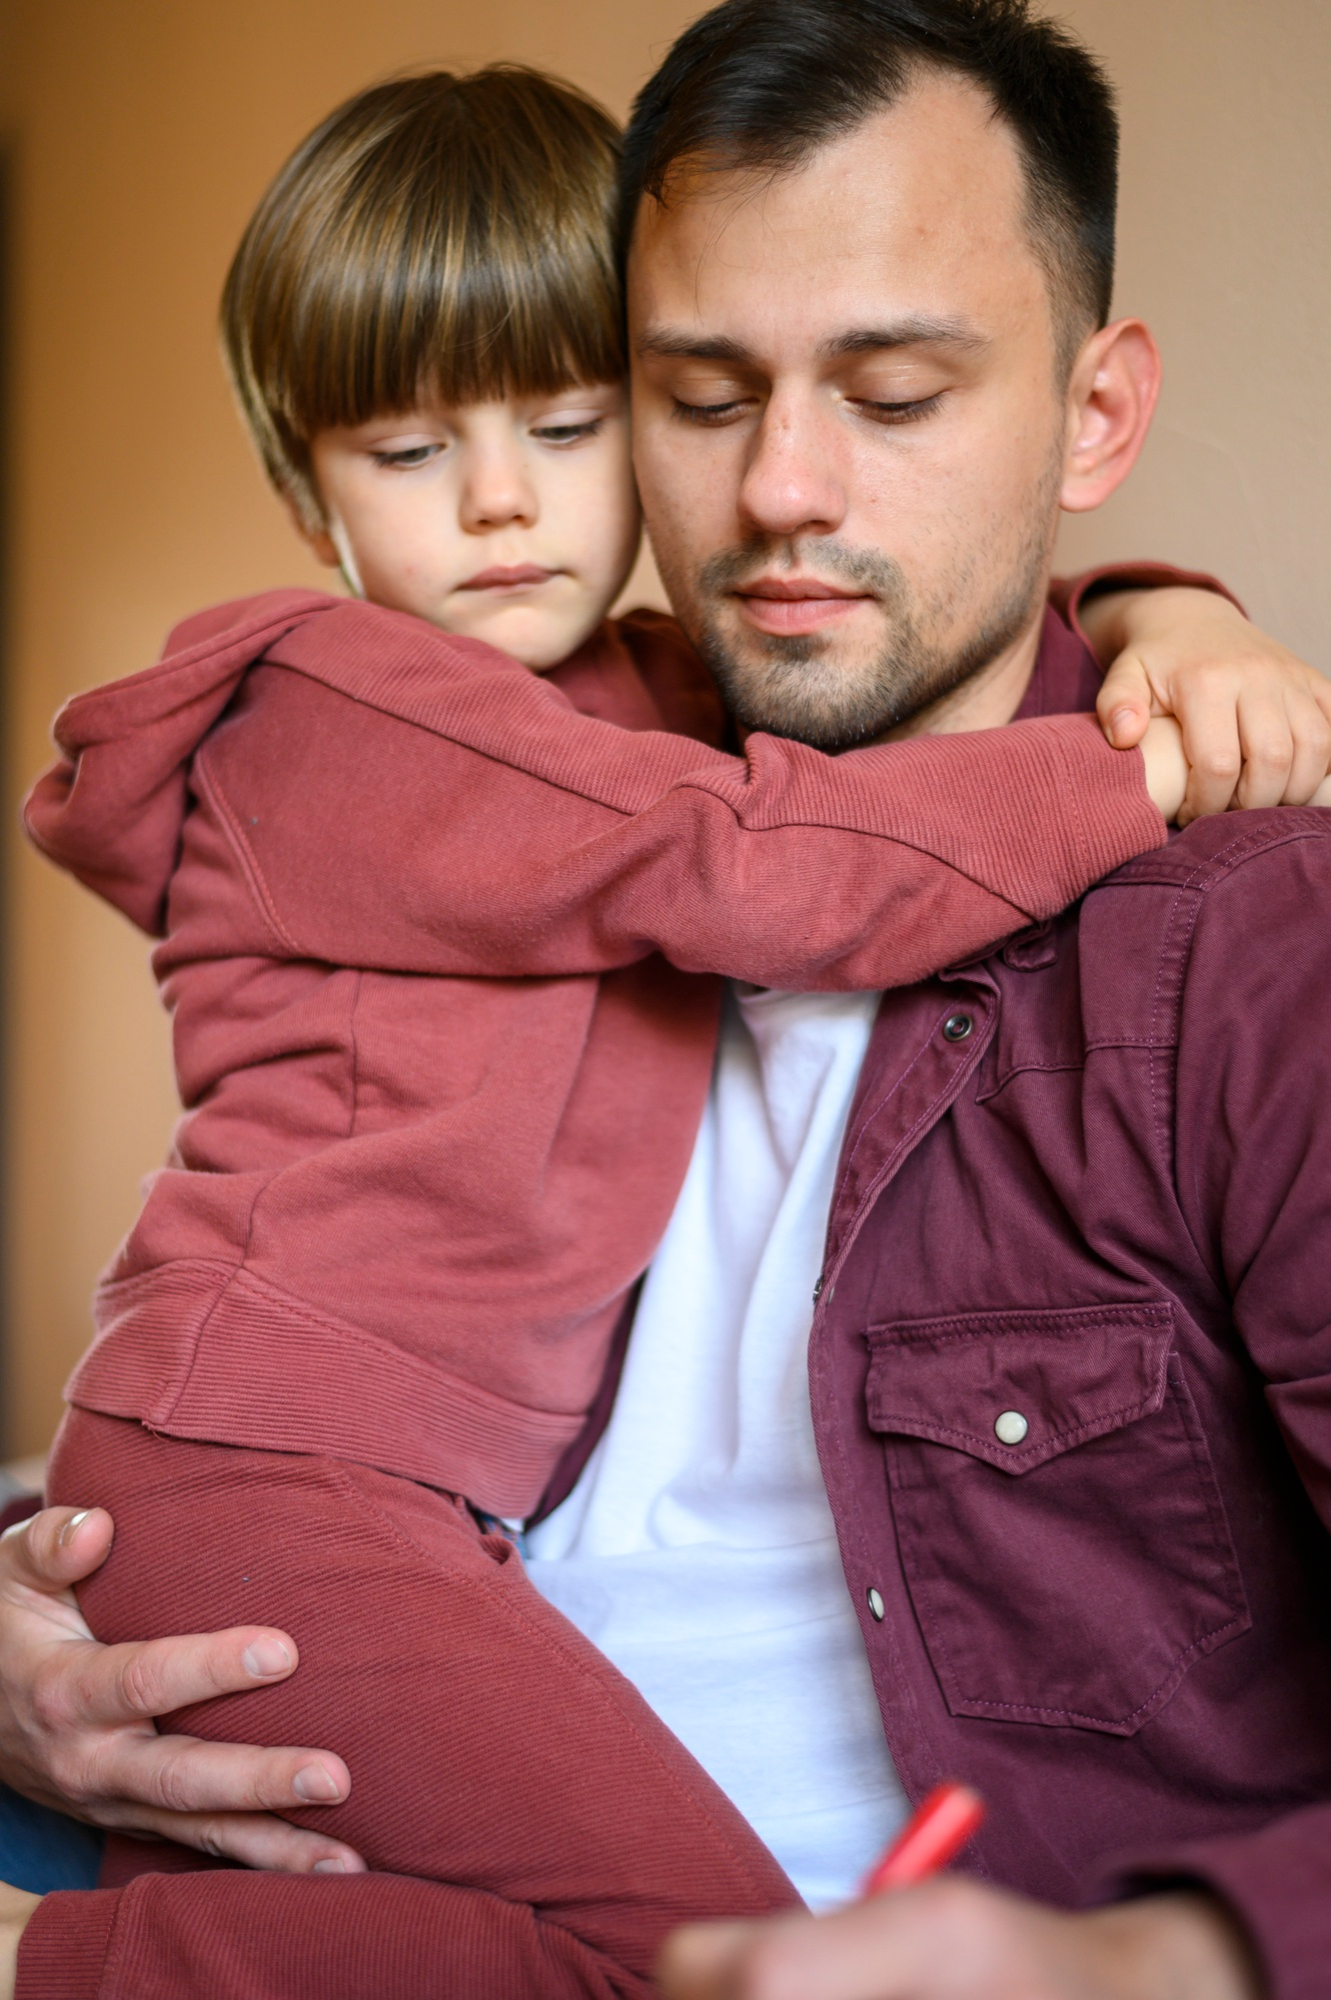 A little boy hugging his father | Source: Freepik